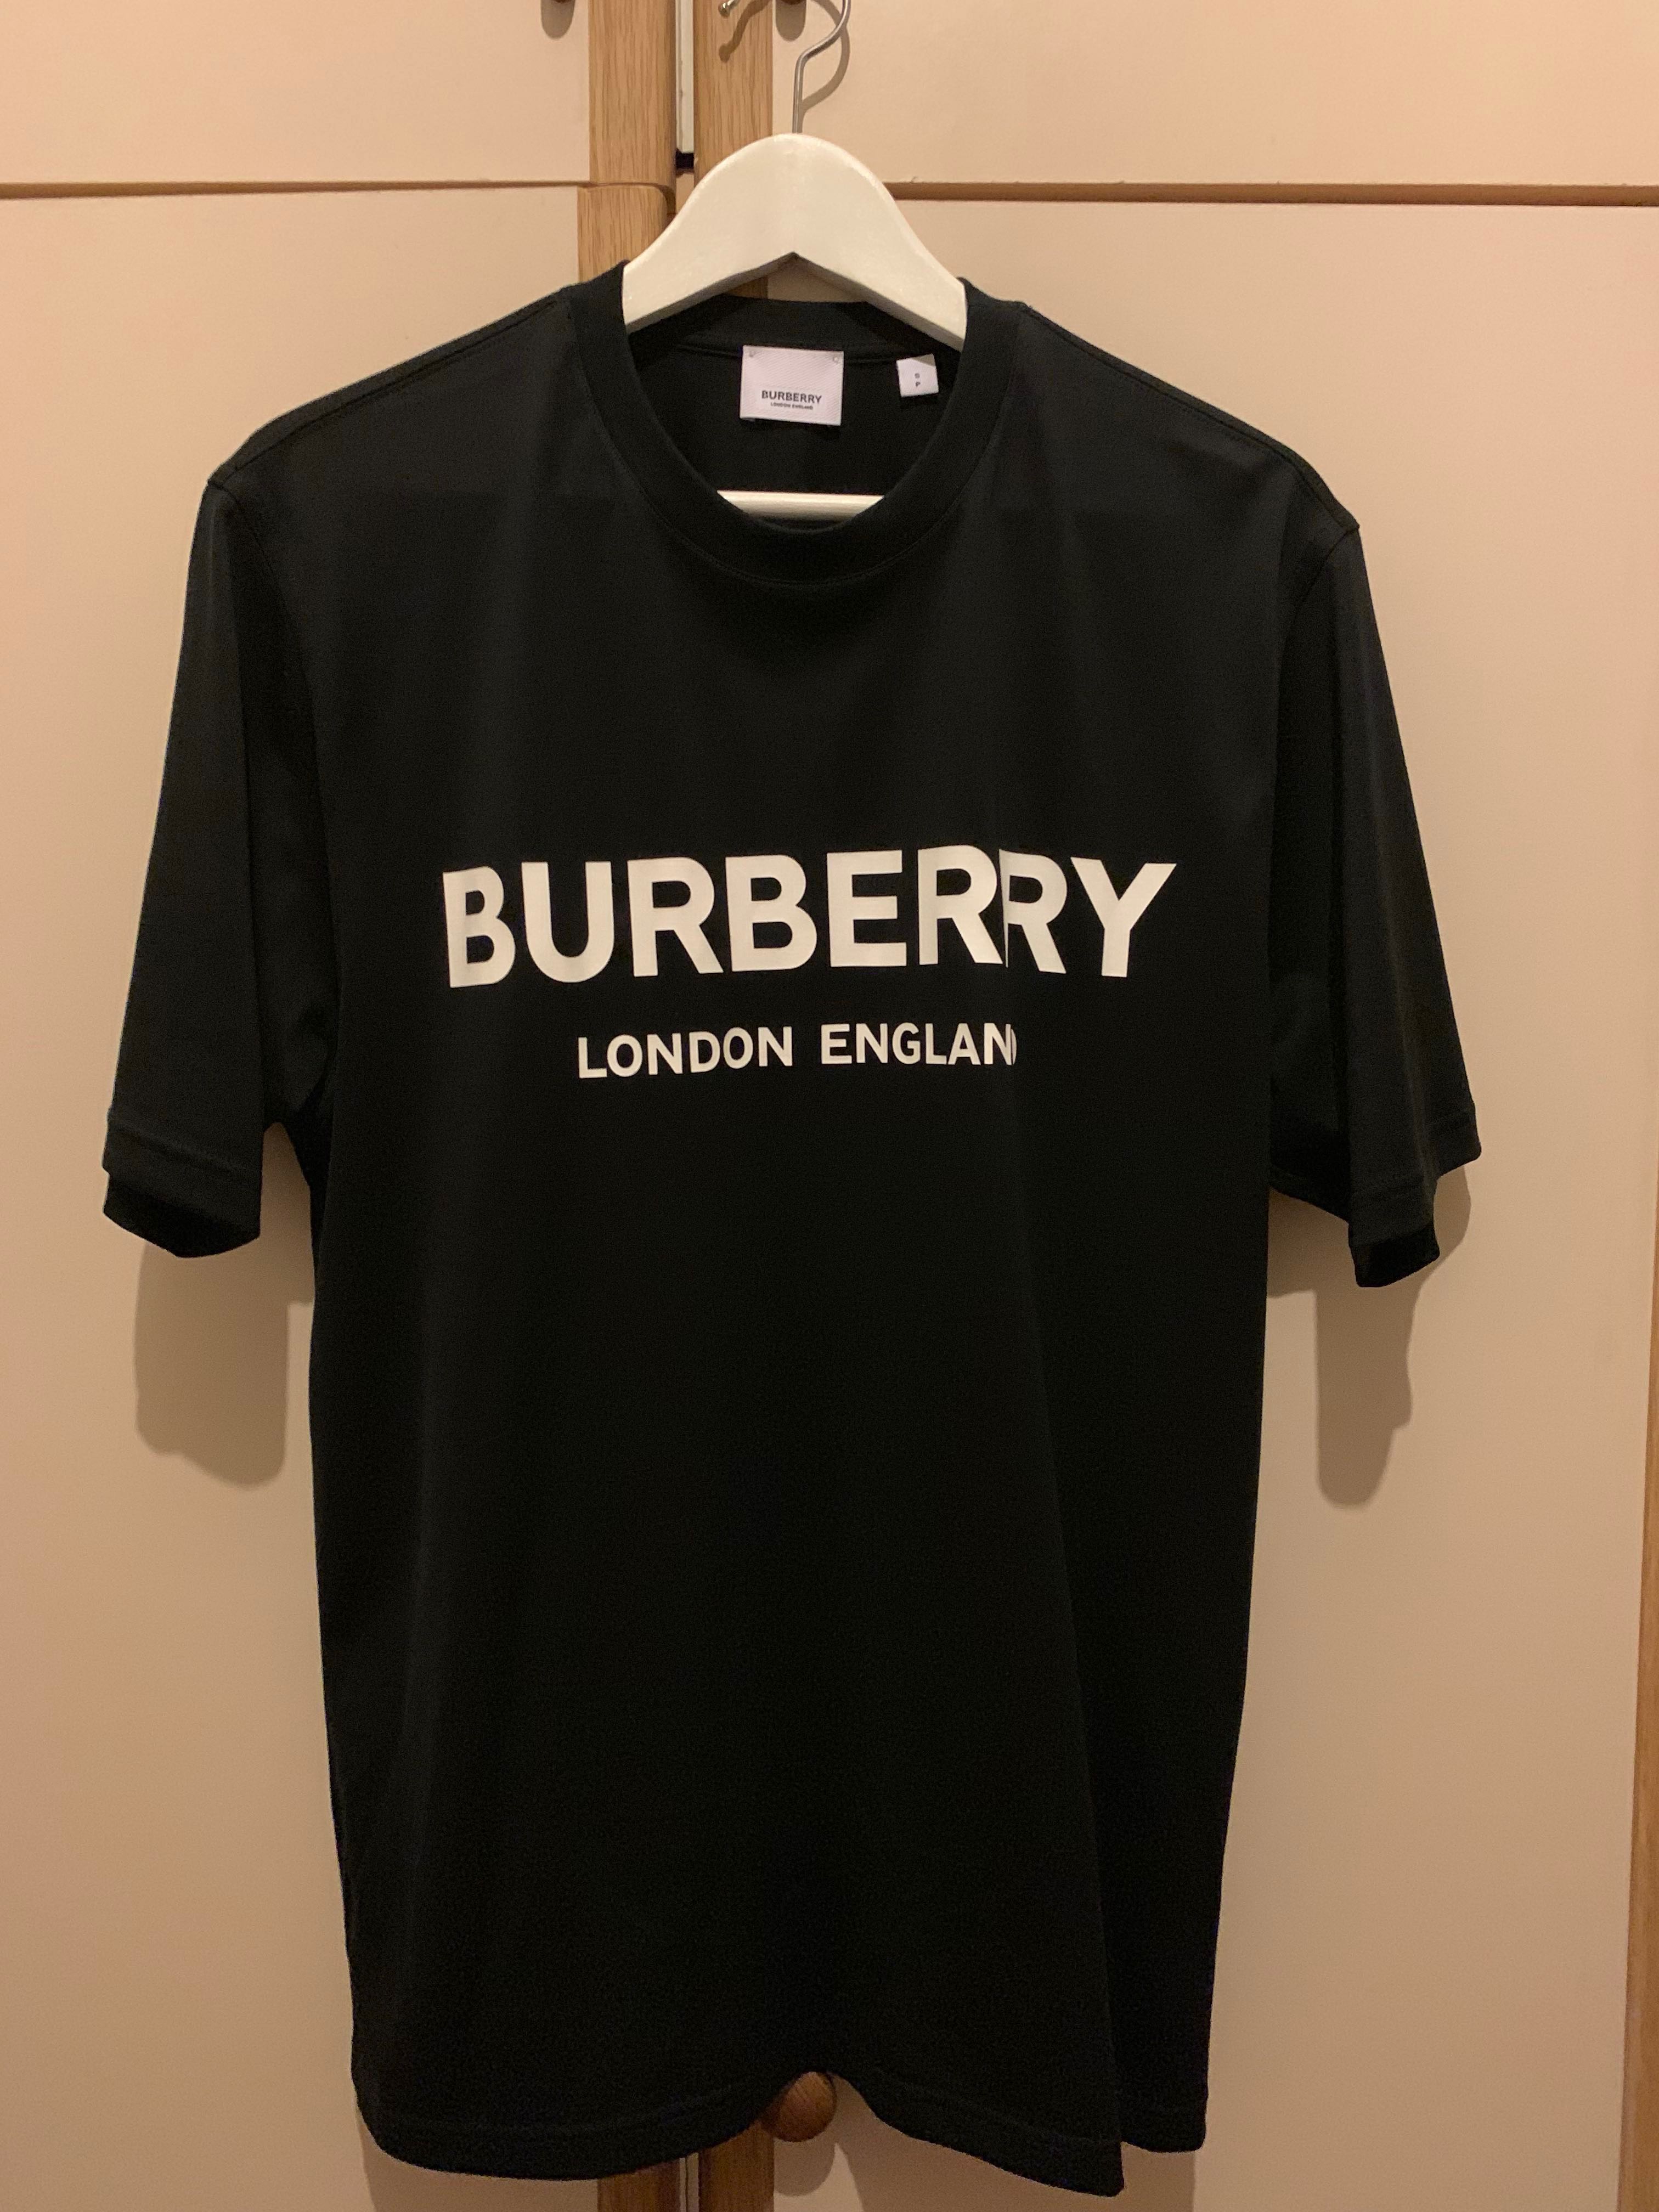 burberry logo tee